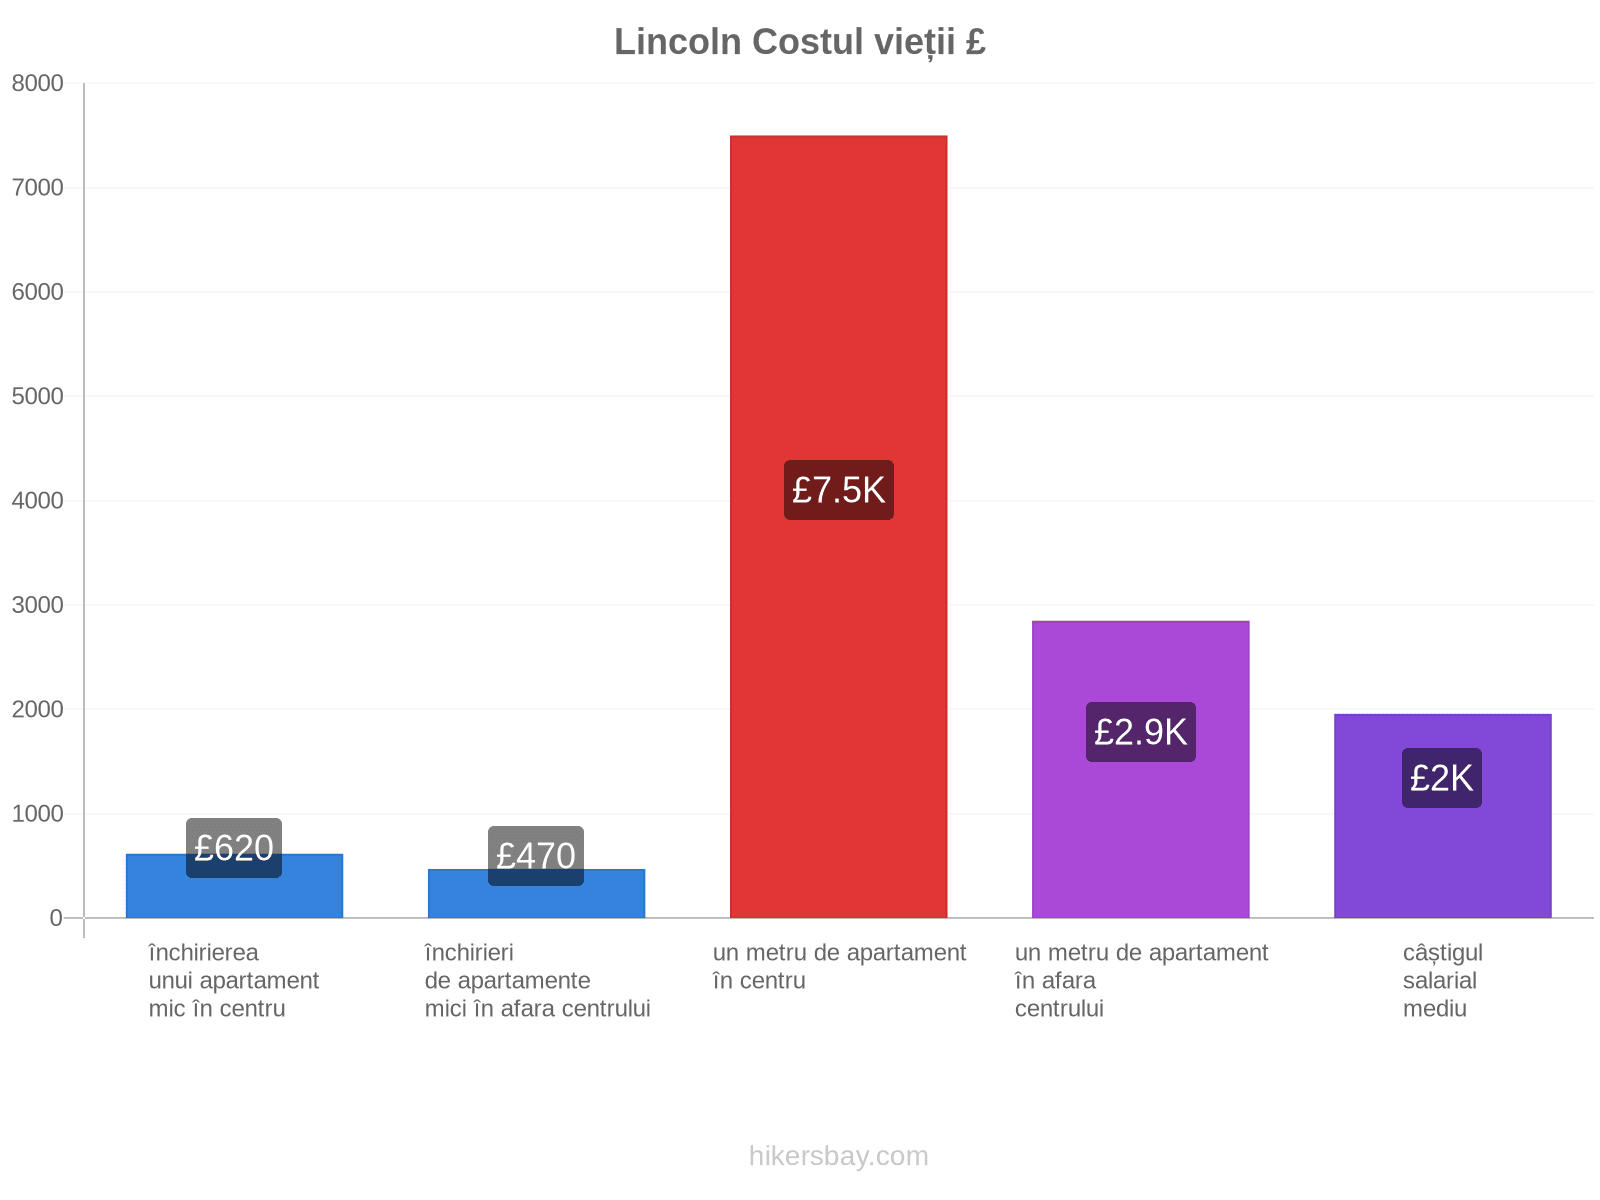 Lincoln costul vieții hikersbay.com